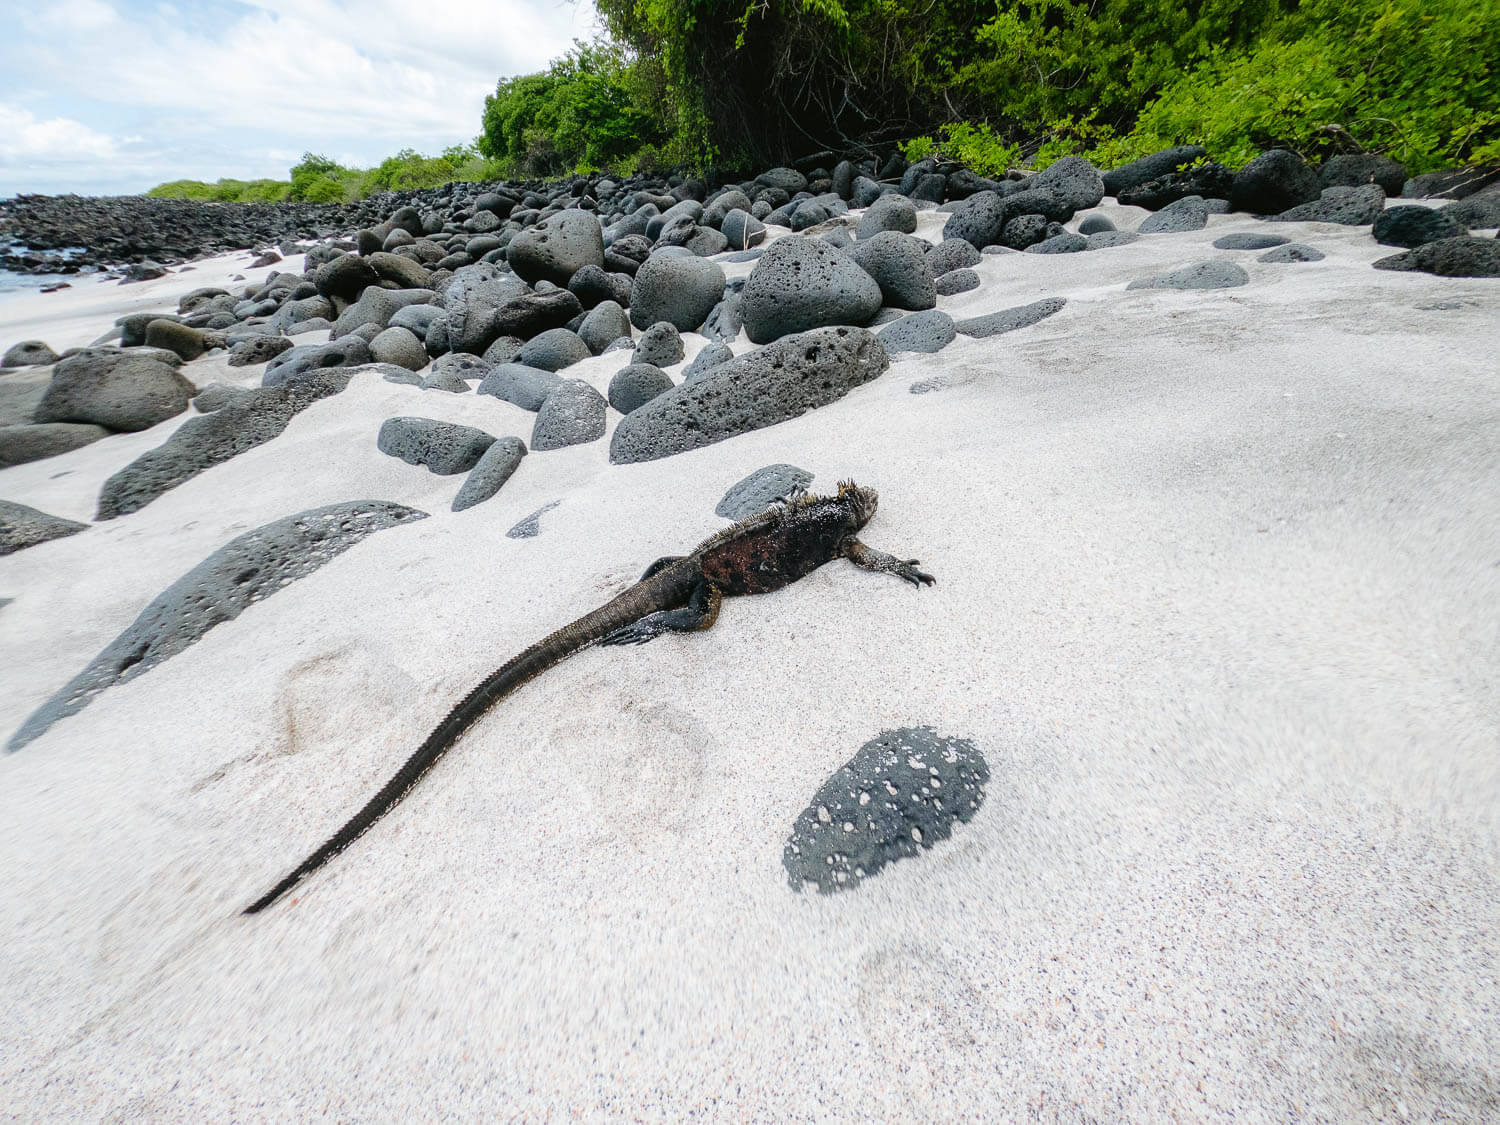 An iguana at the Playa Baquerizo in San Cristóbal island, Galápagos